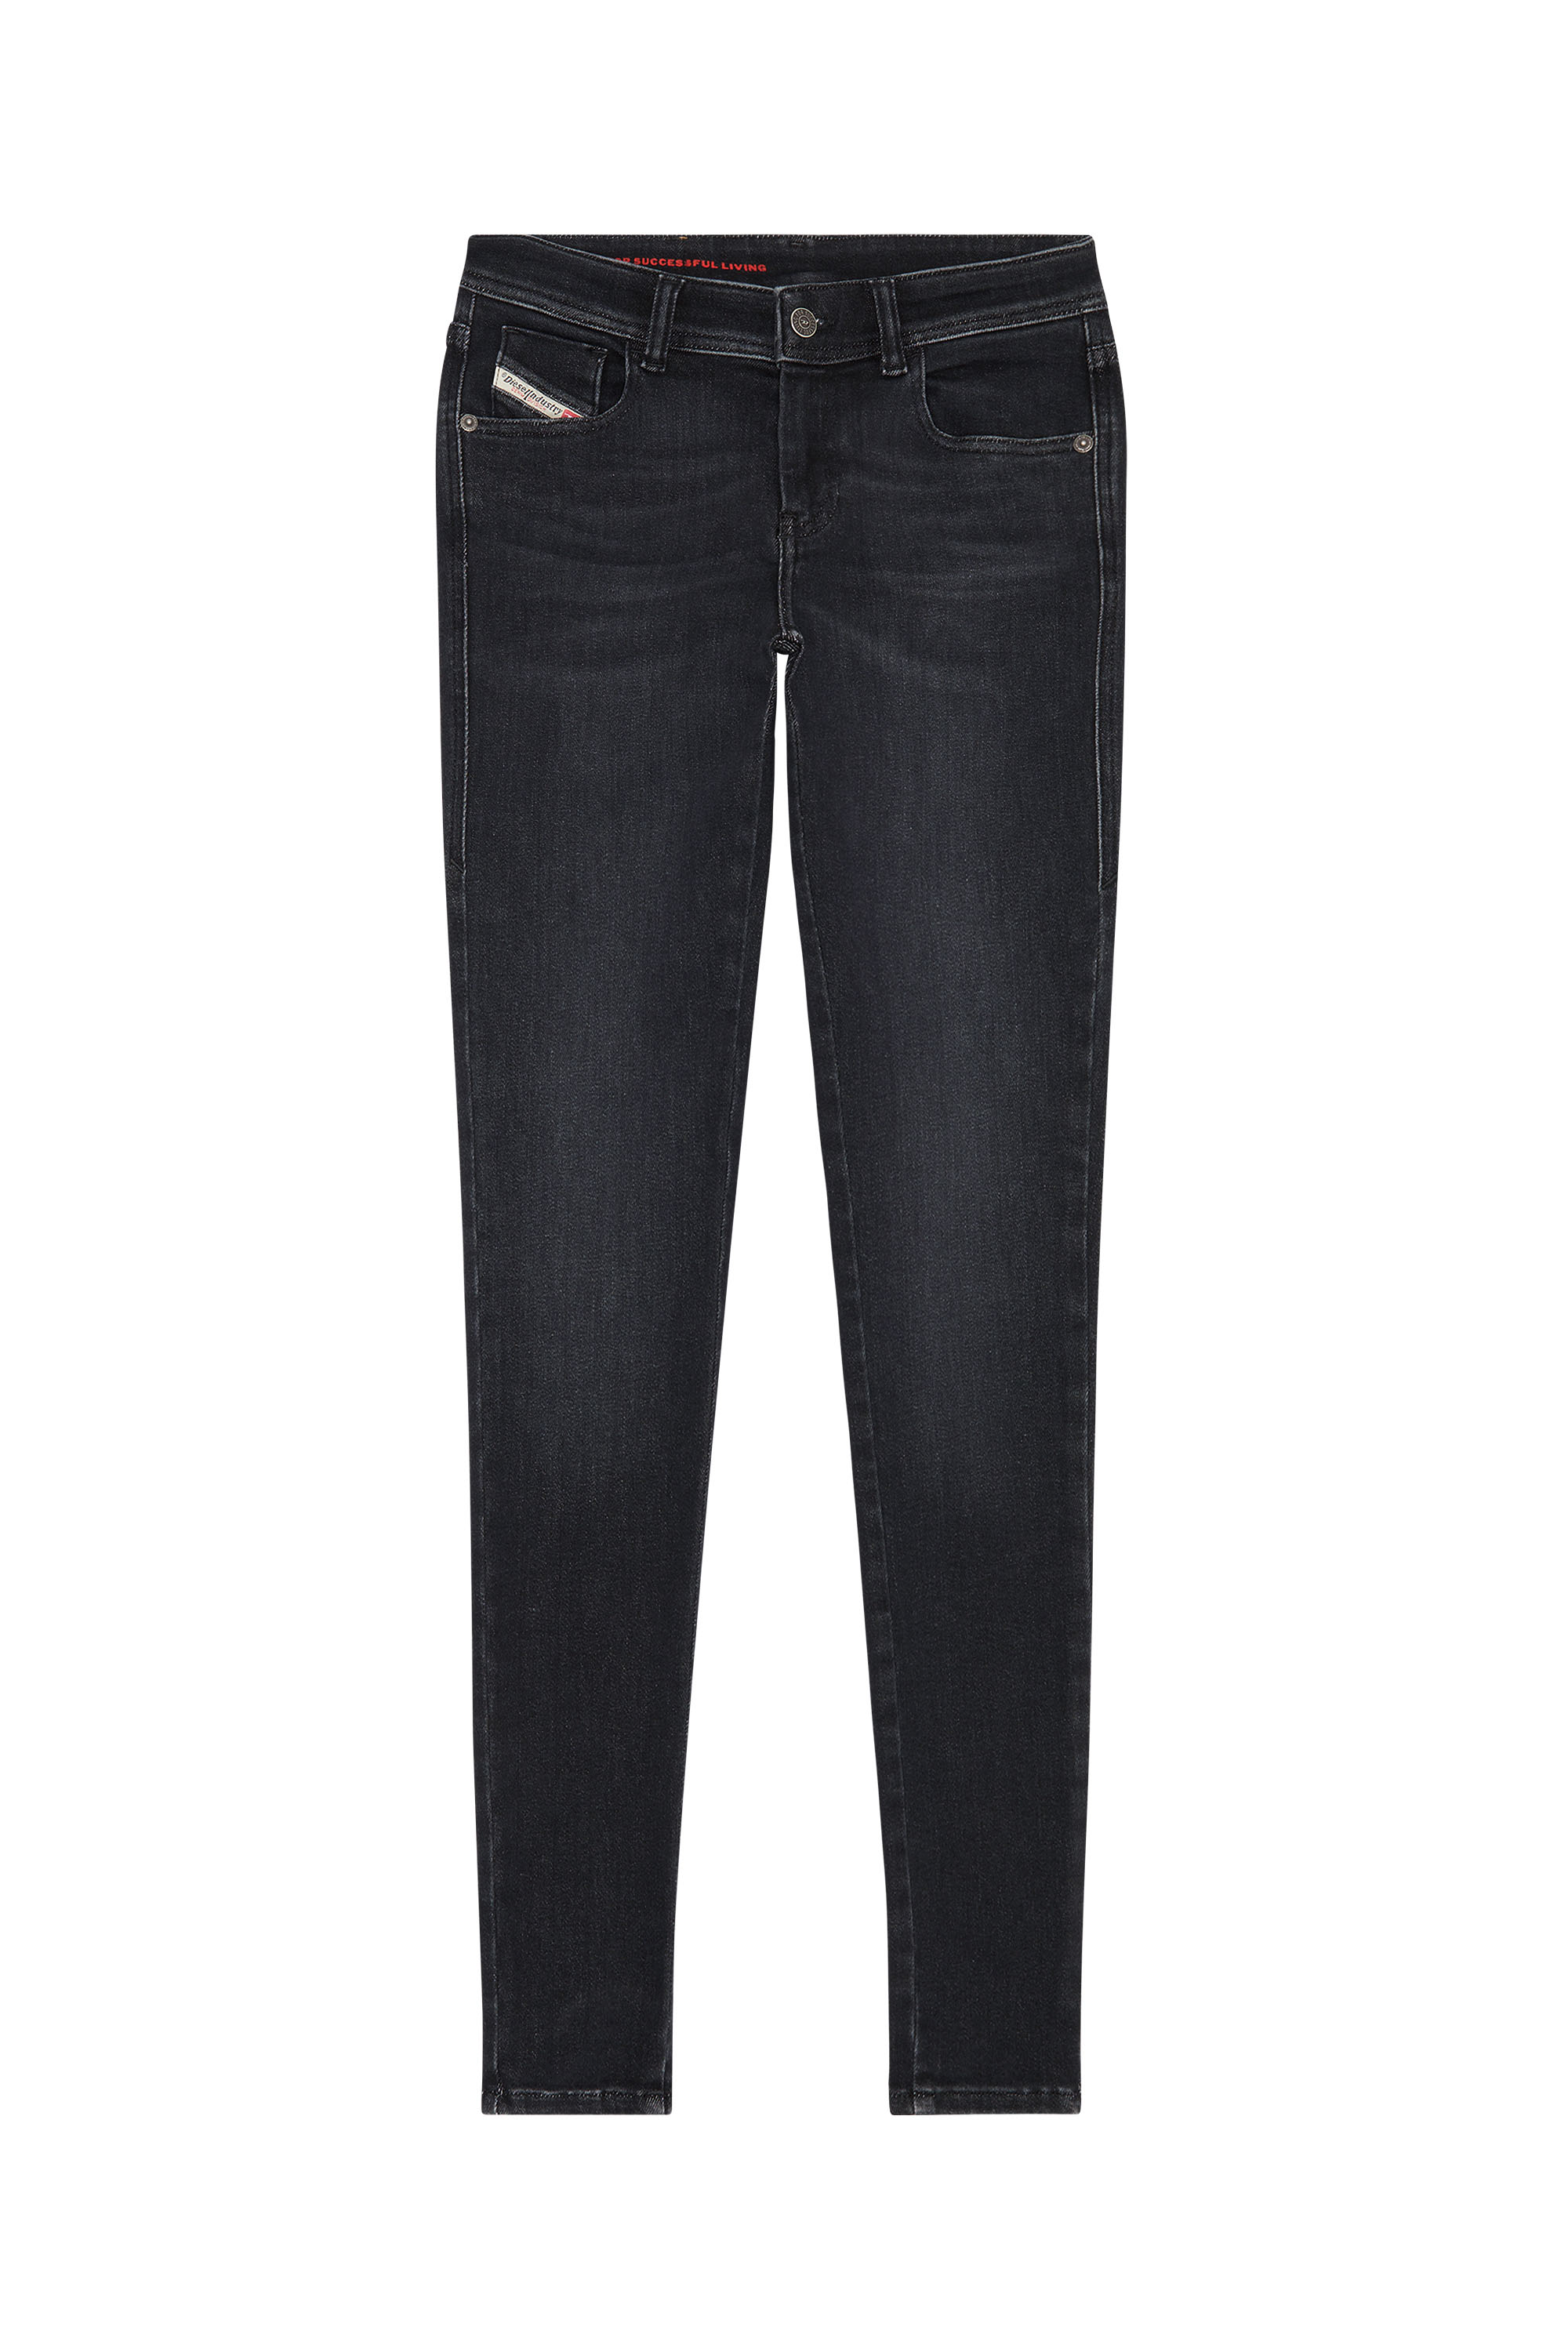 2017 Slandy 09D96 Super skinny Jeans, Black/Dark grey - Jeans